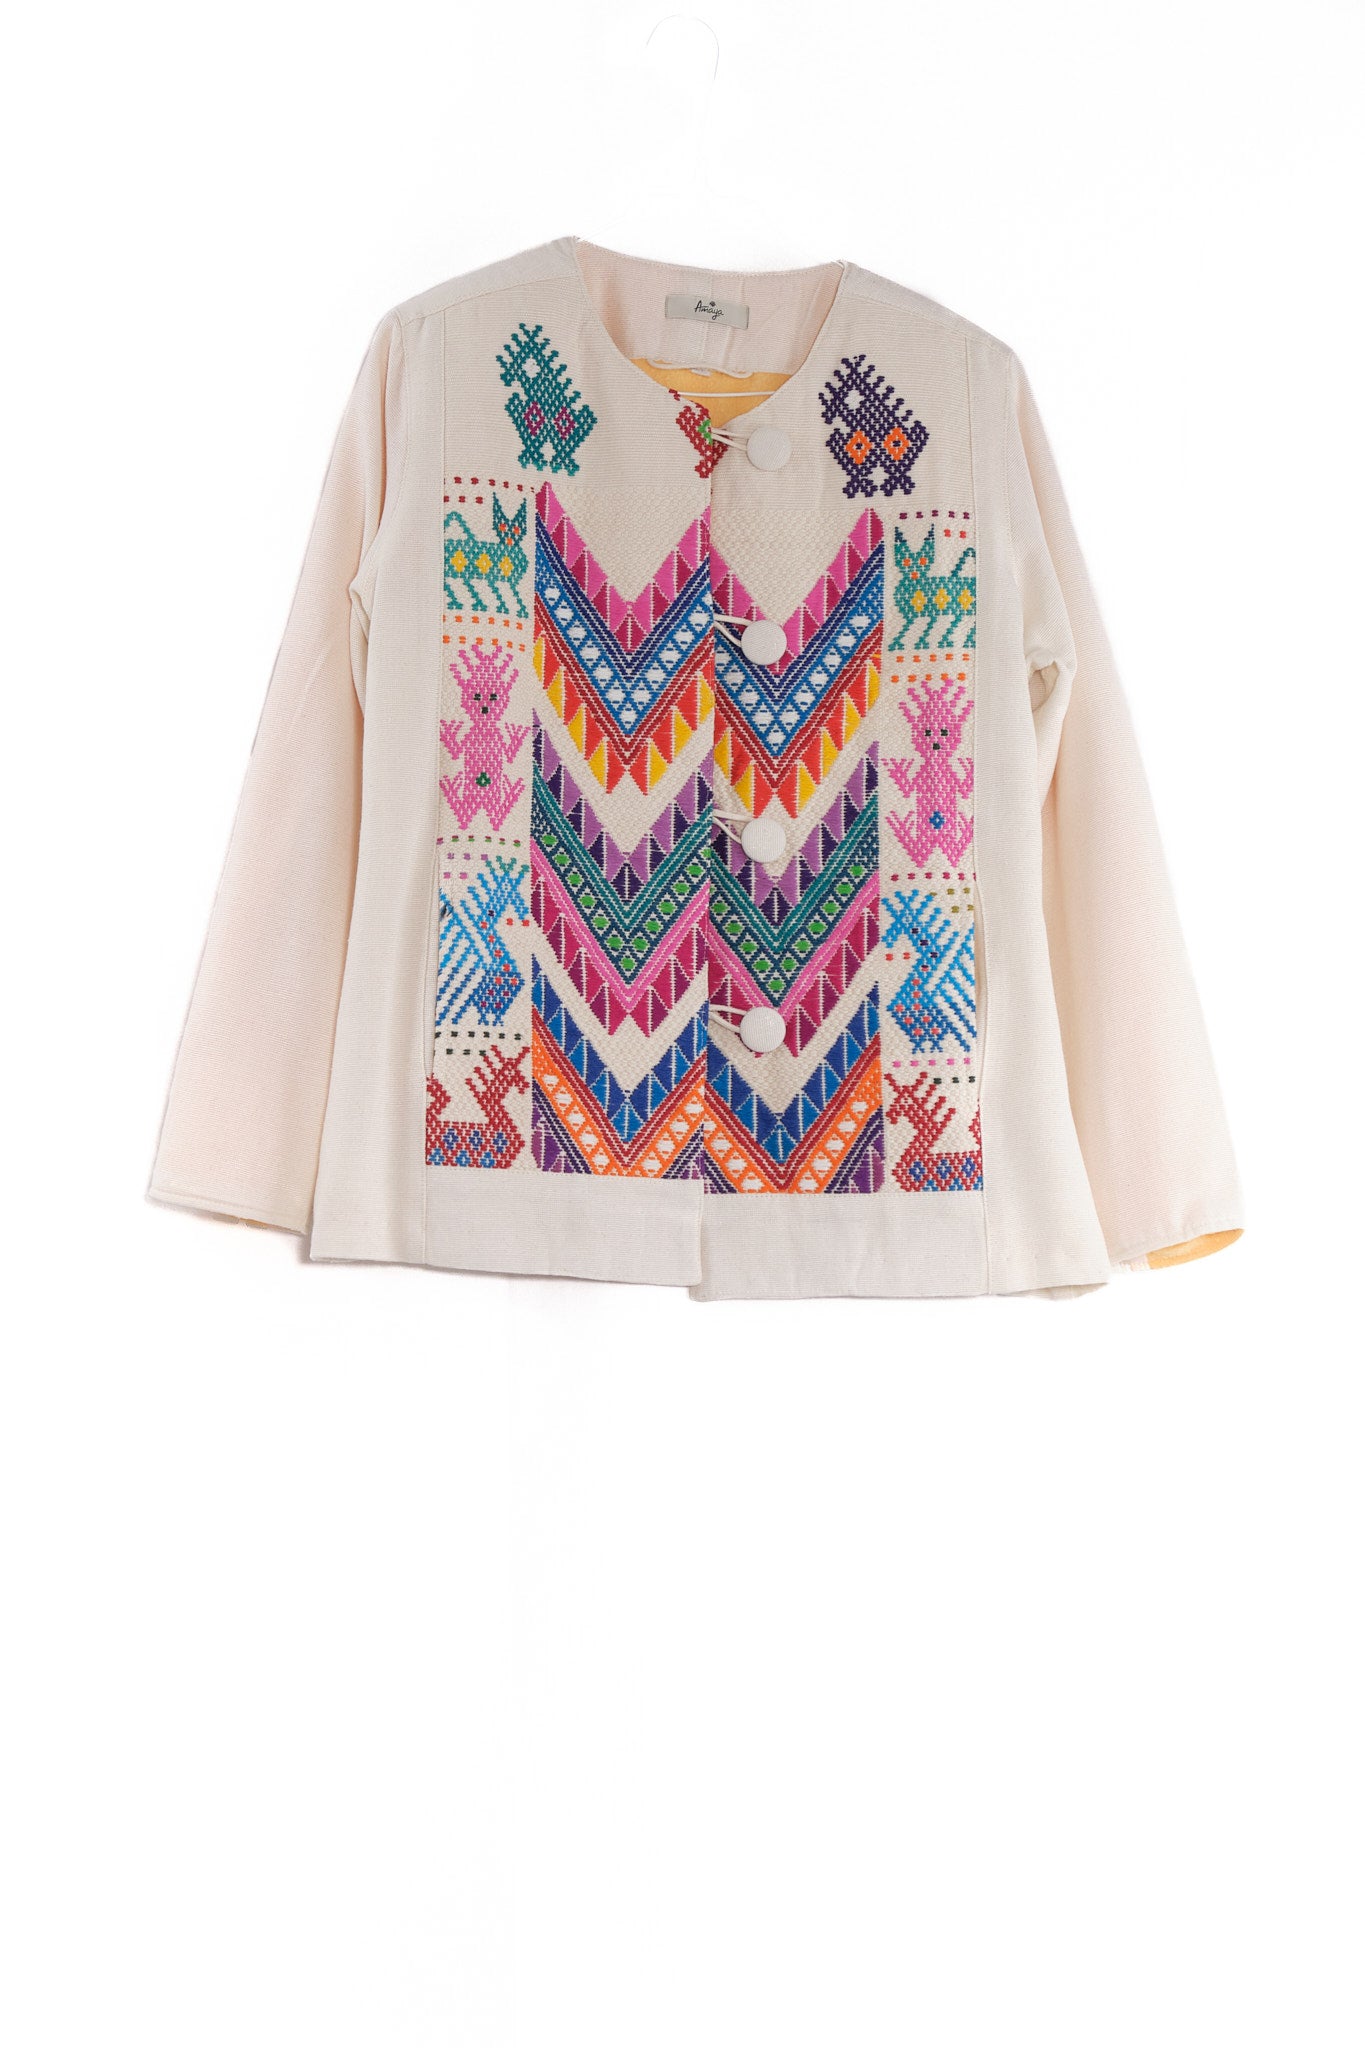 Arcoiris Jacket ecru white multicolor embroidery  garment